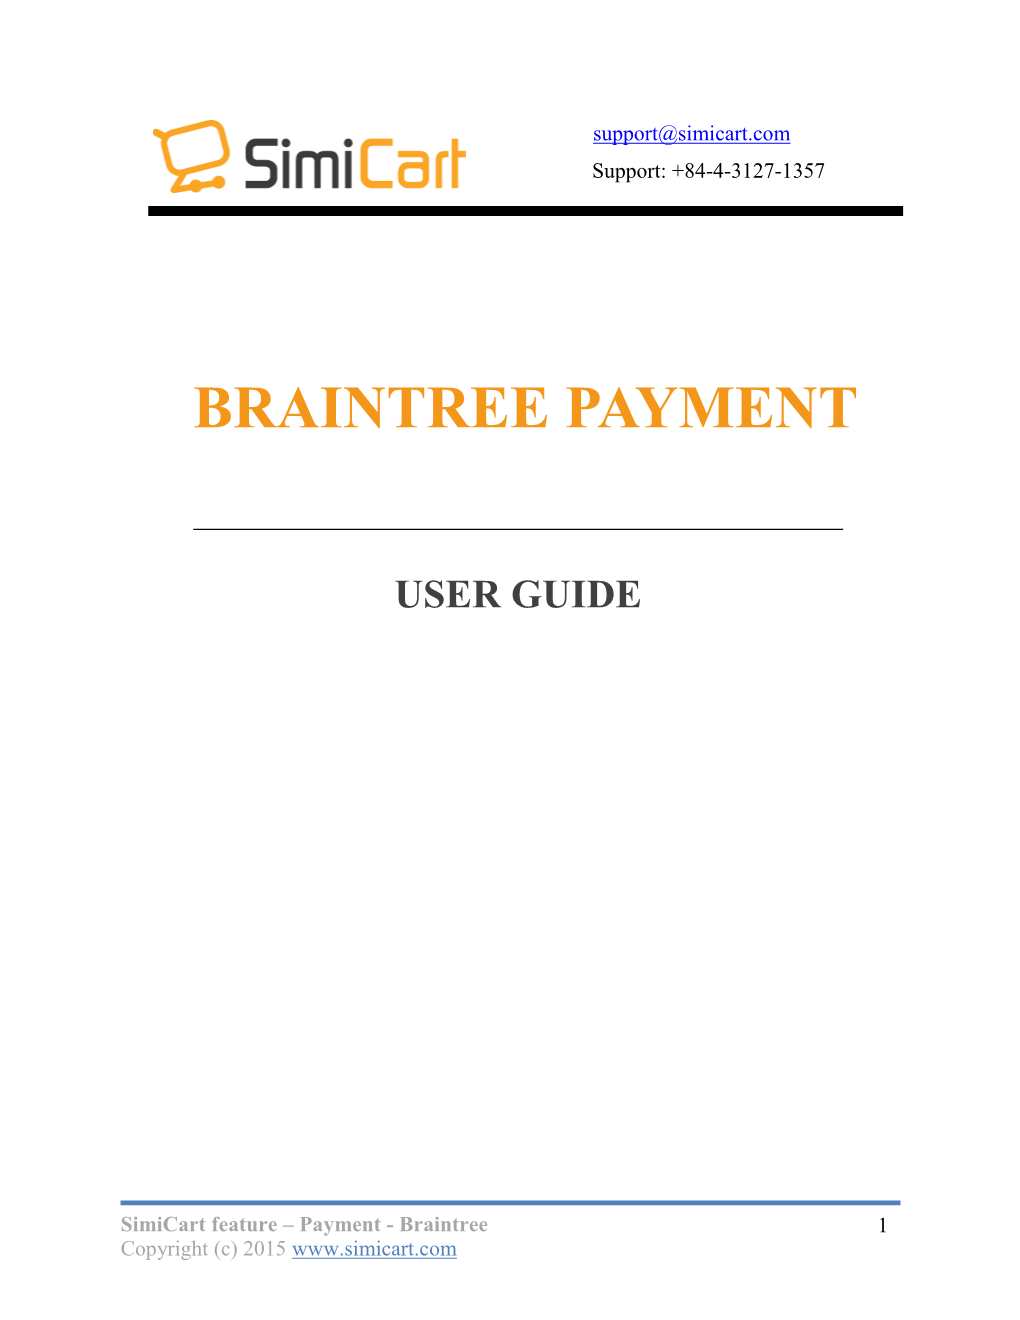 Braintree Payment